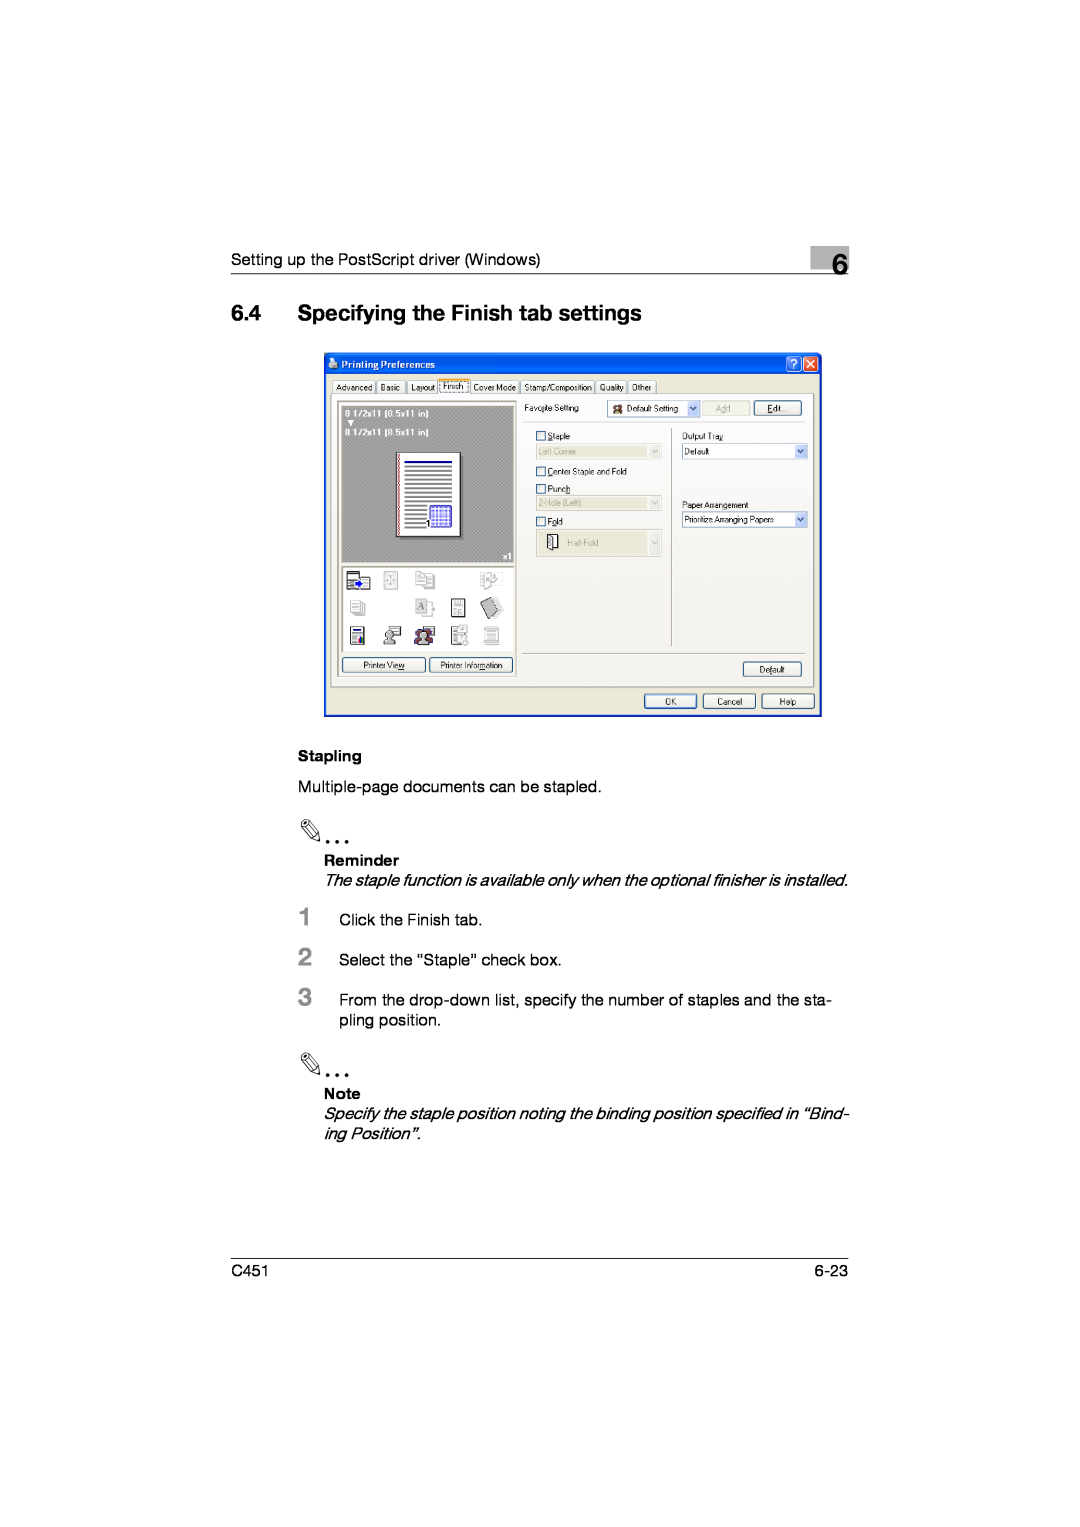 Konica Minolta C451 manual 6.4Specifying the Finish tab settings, Stapling, Reminder 